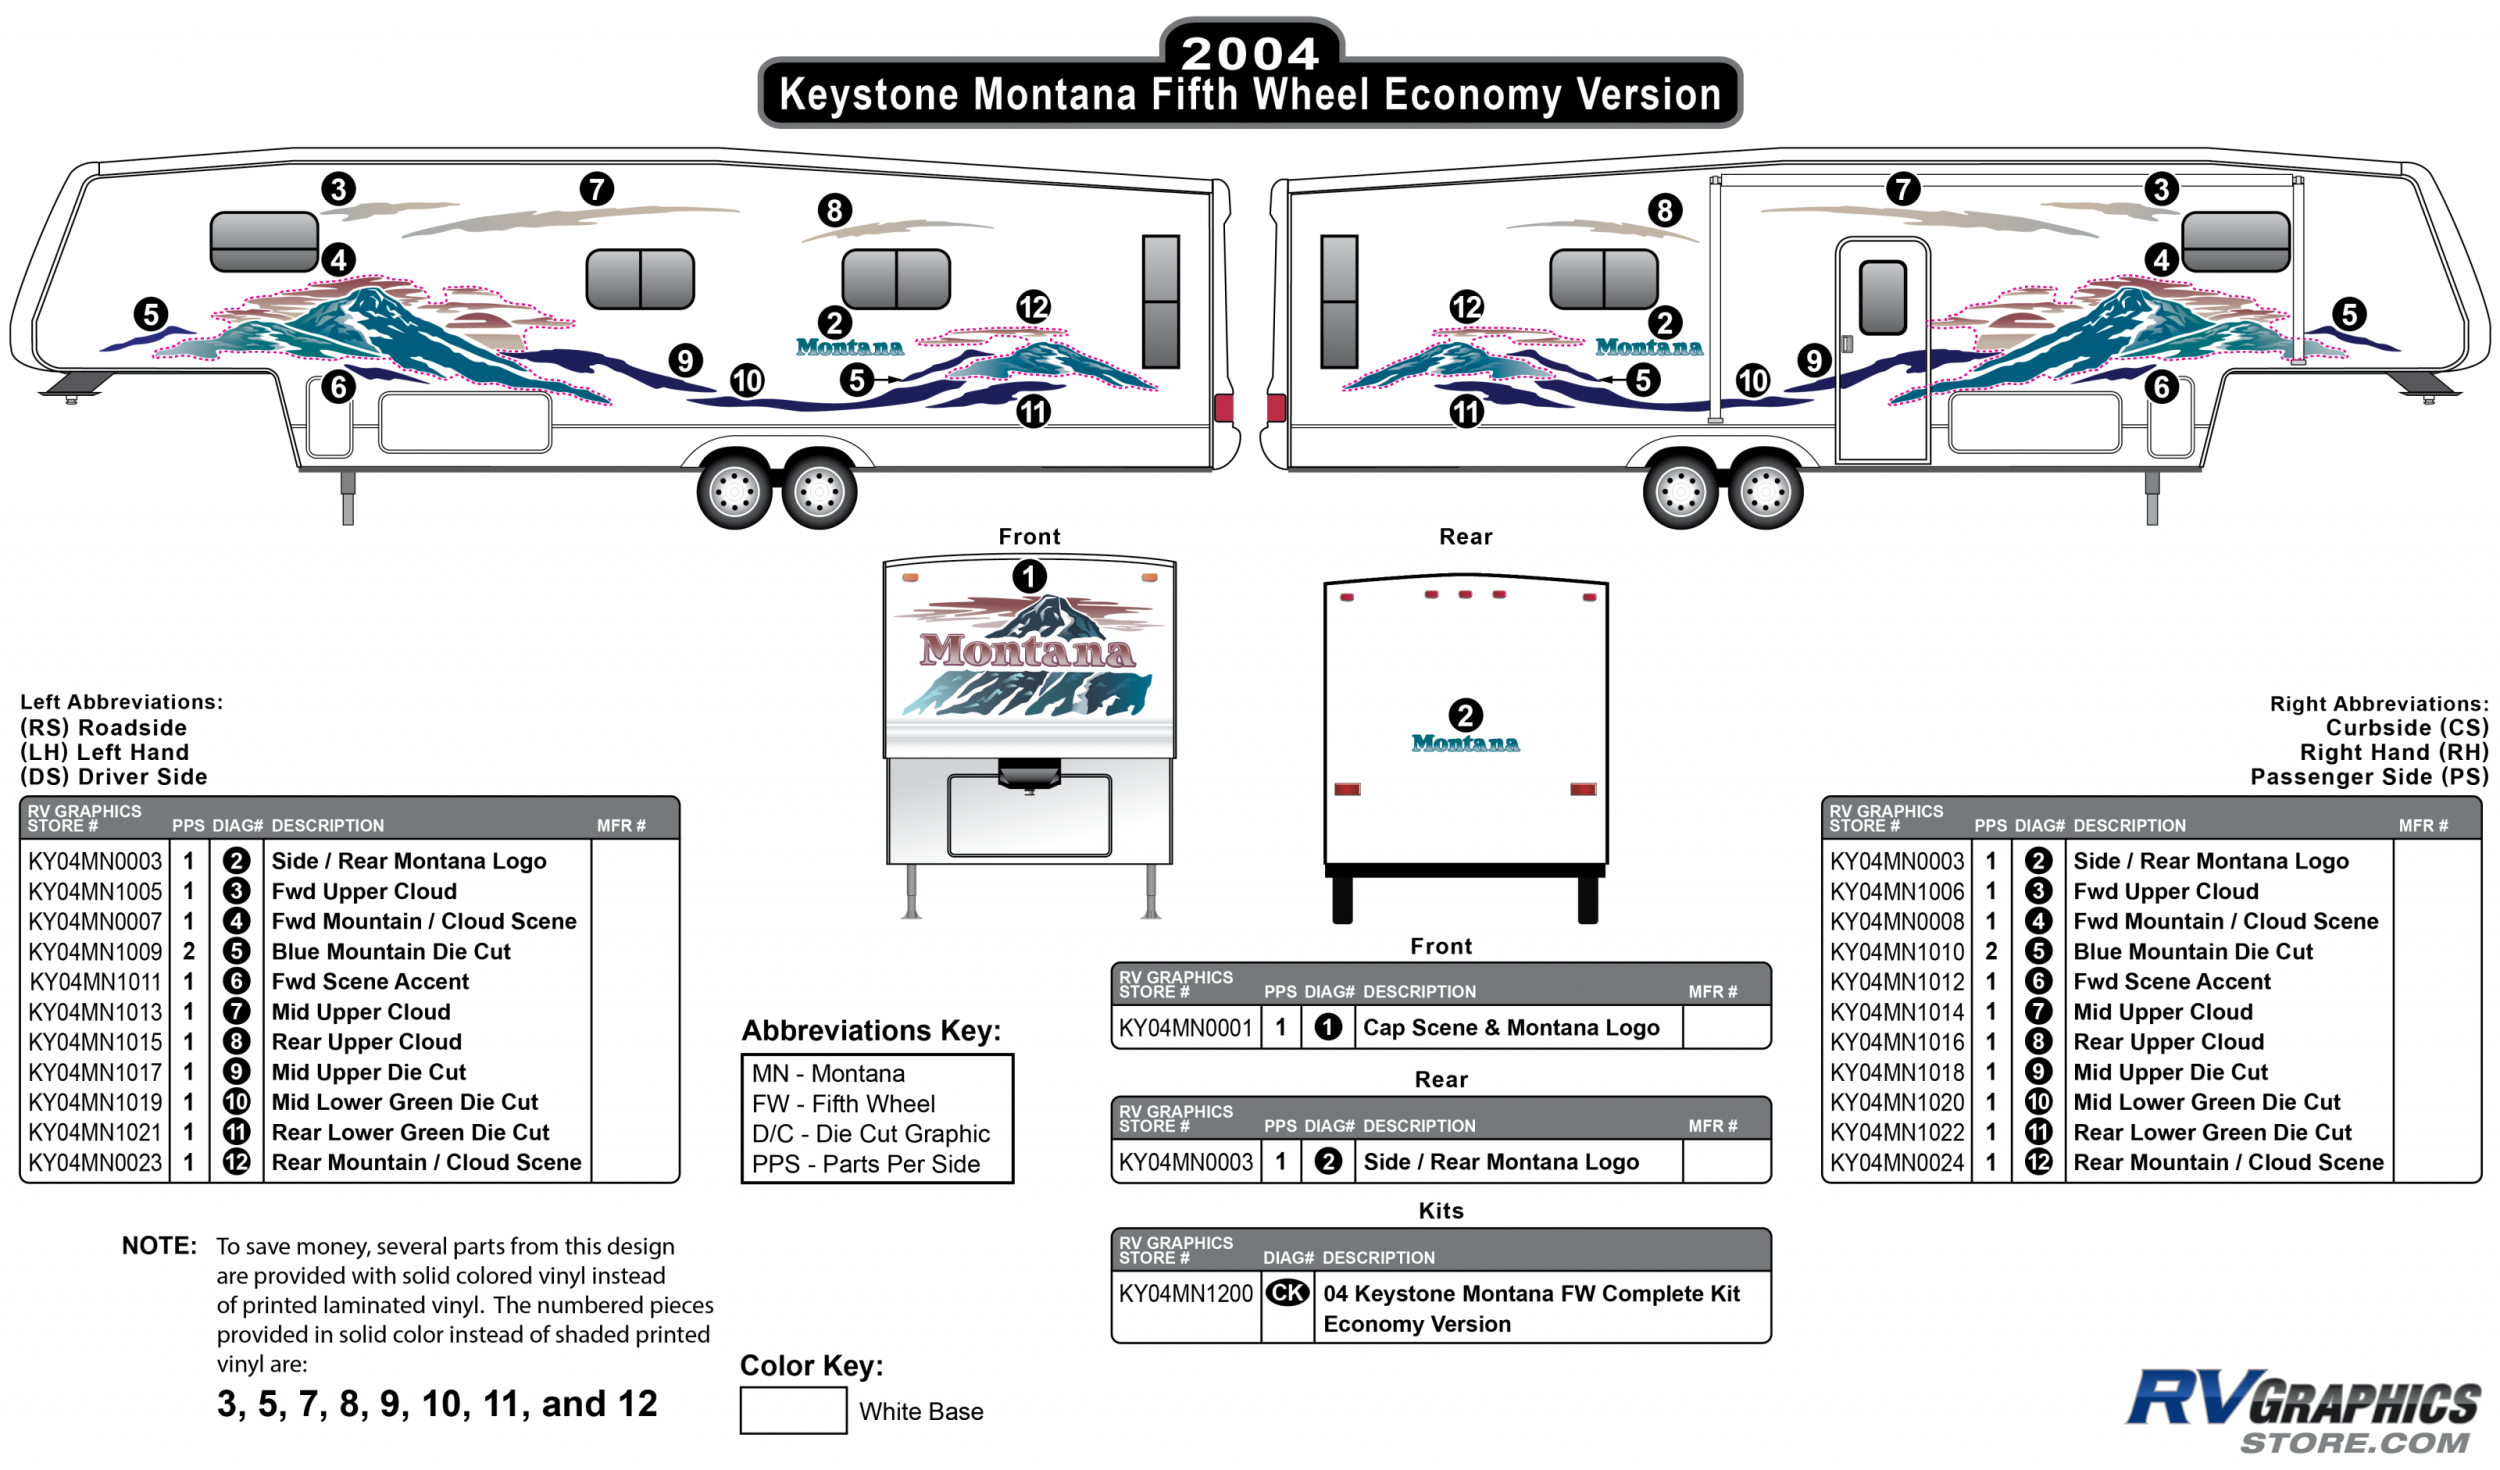 Montana - 2004 Montana FW-Fifth Wheel Economy Version